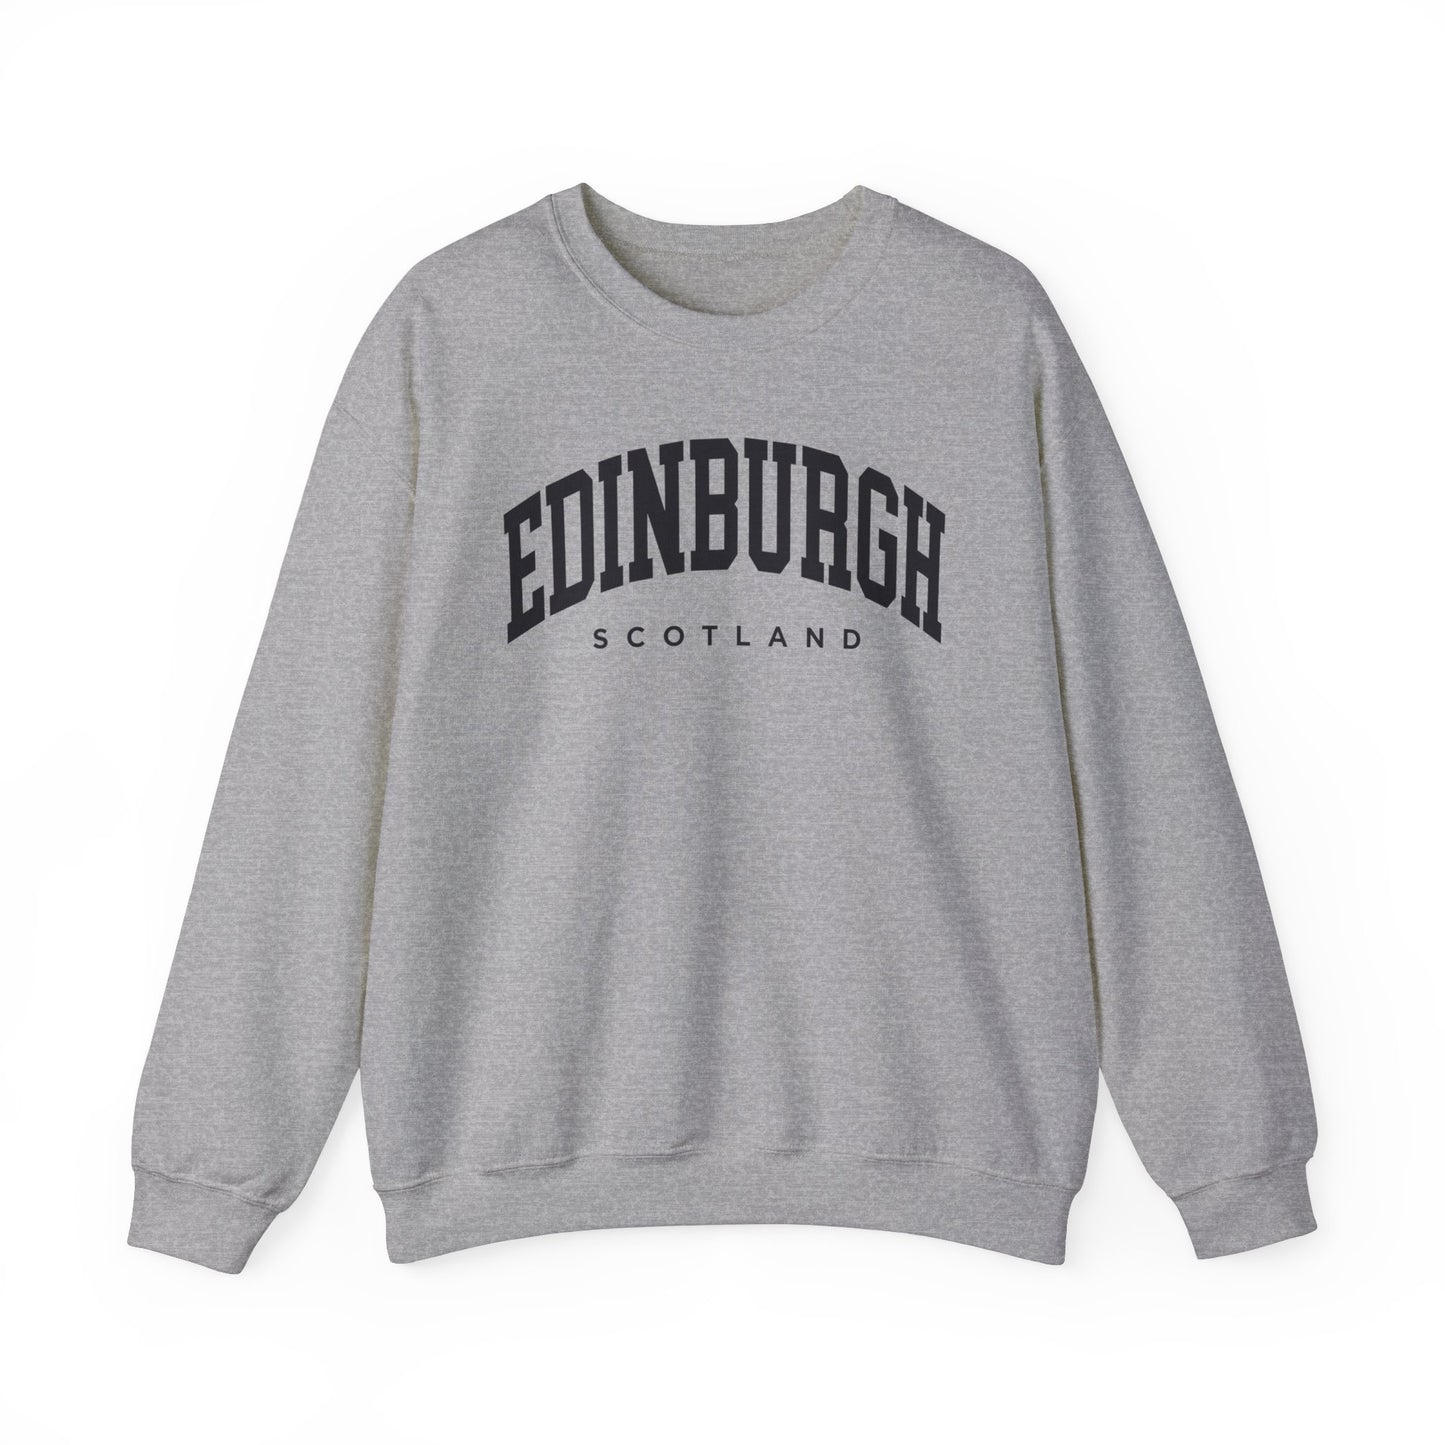 Edinburgh Scotland Sweatshirt